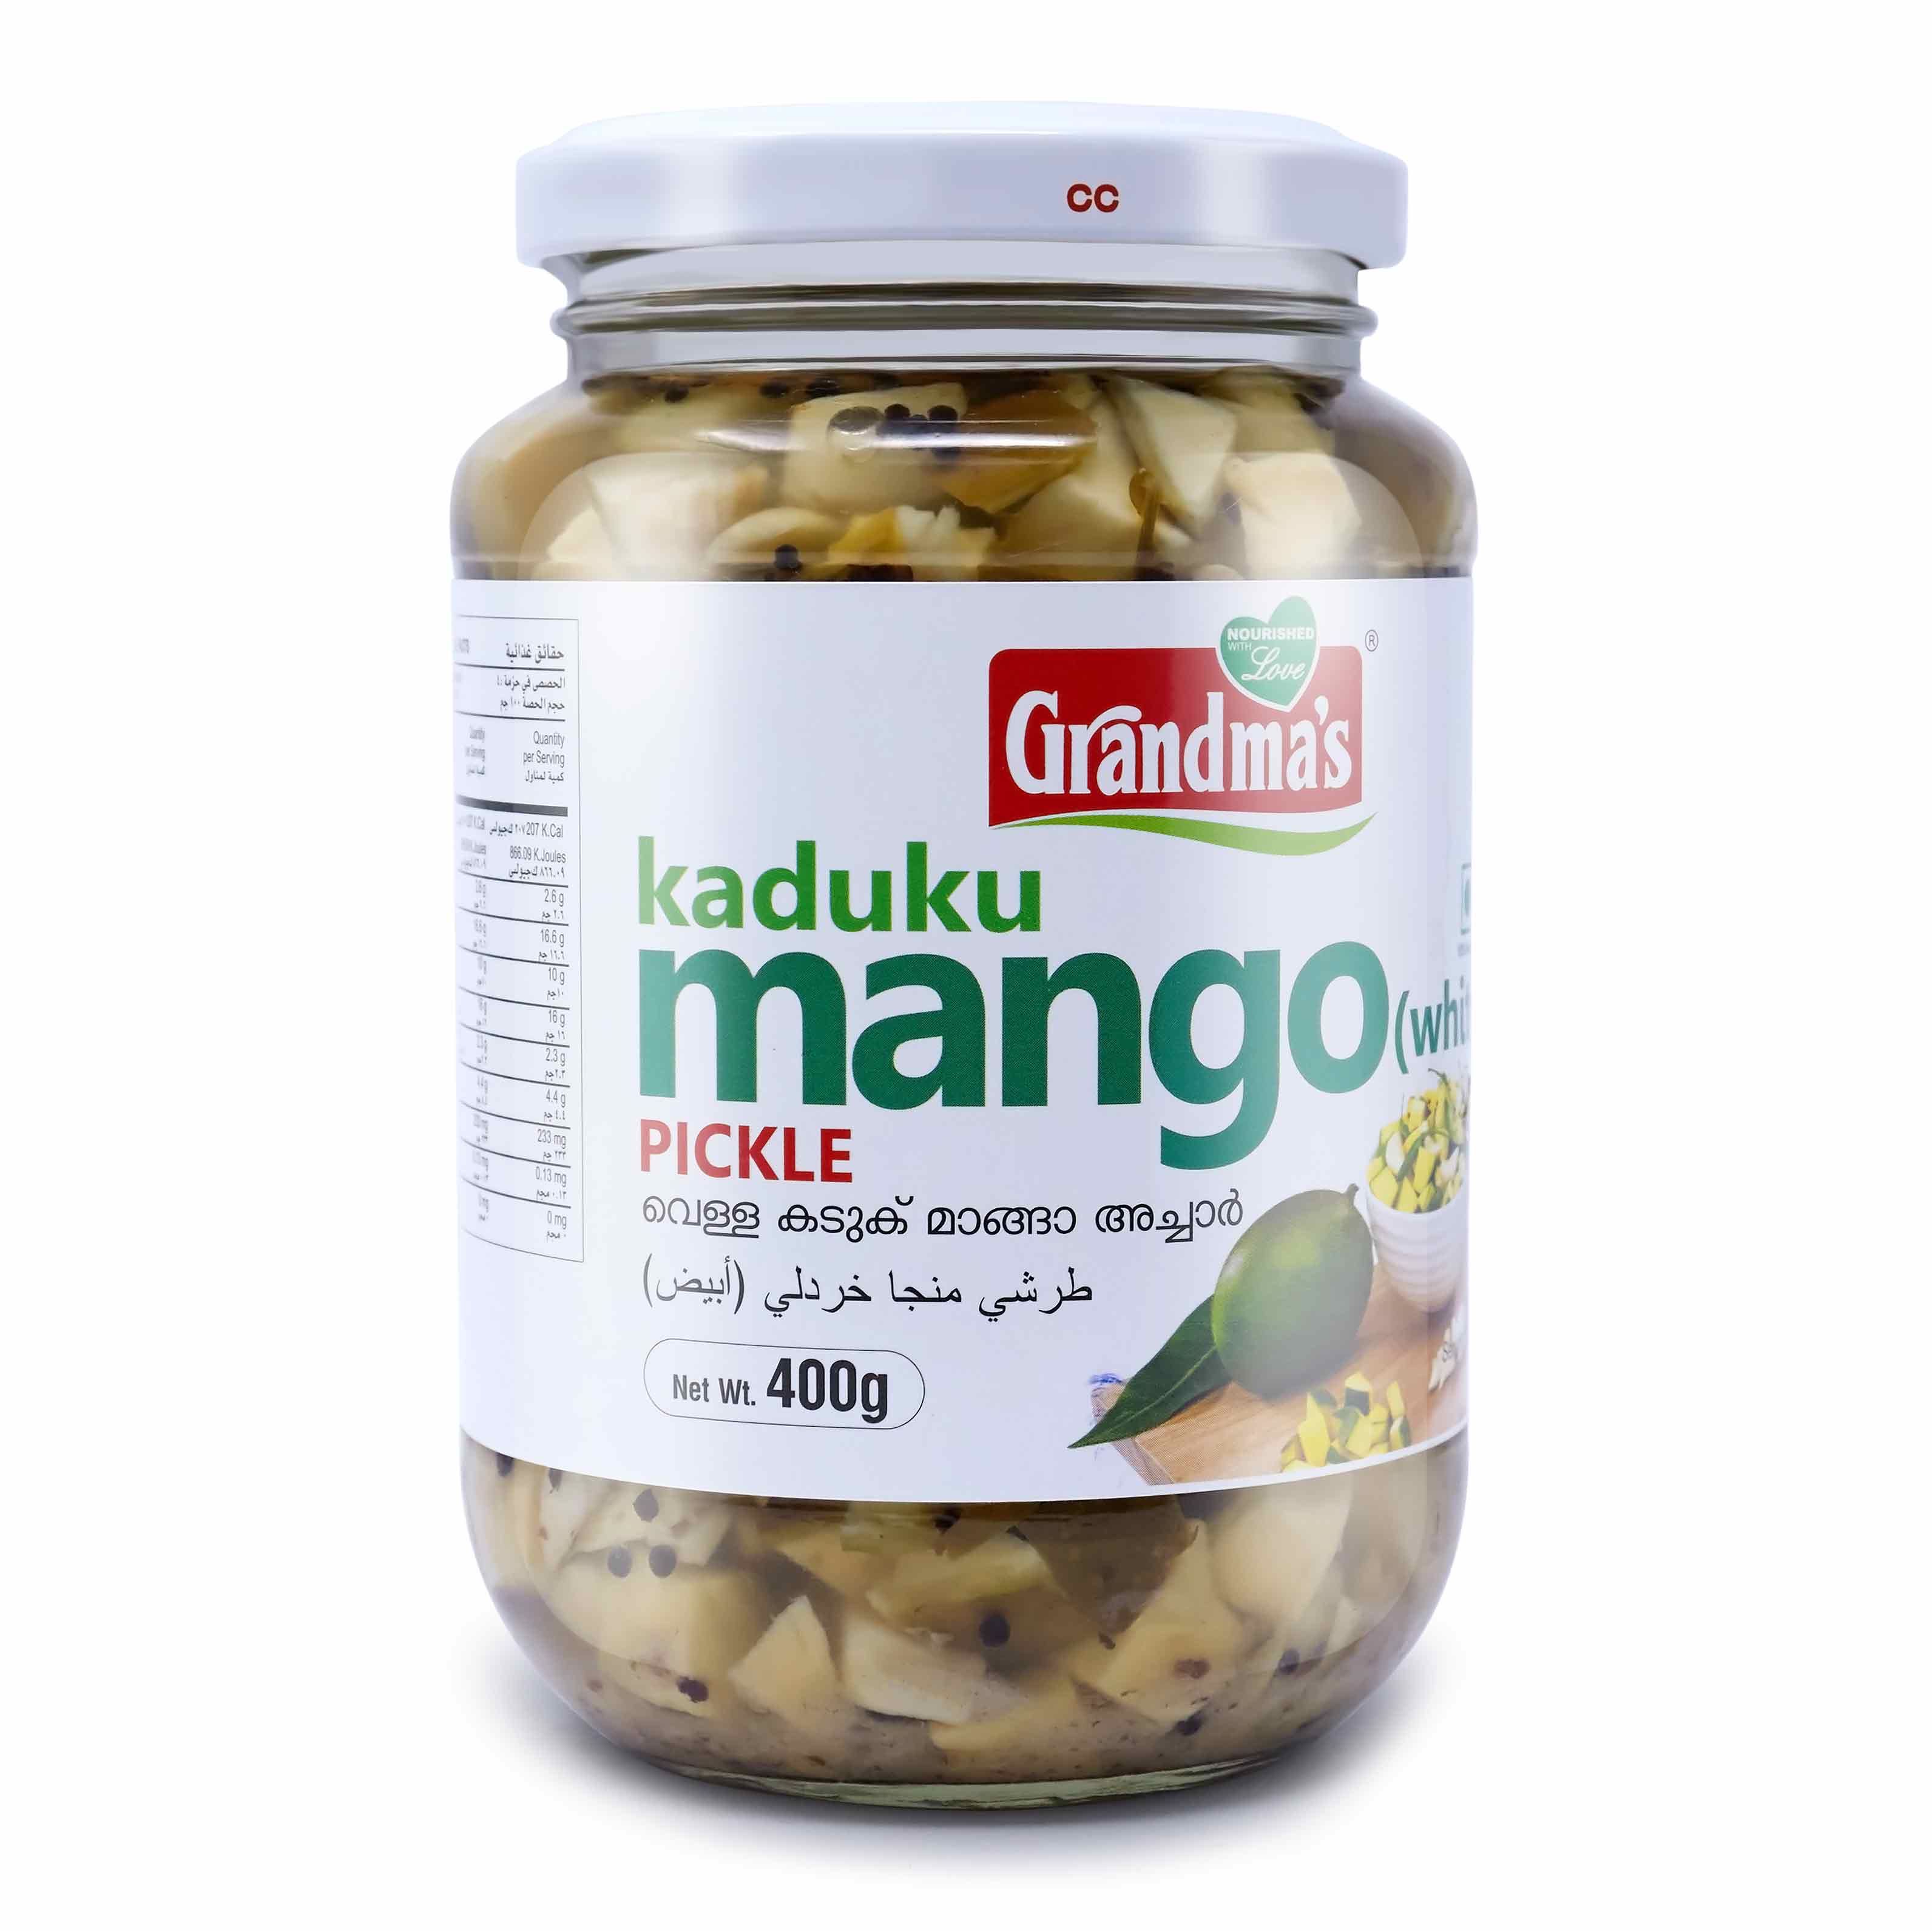 Kaduku Mango (White) Pickle